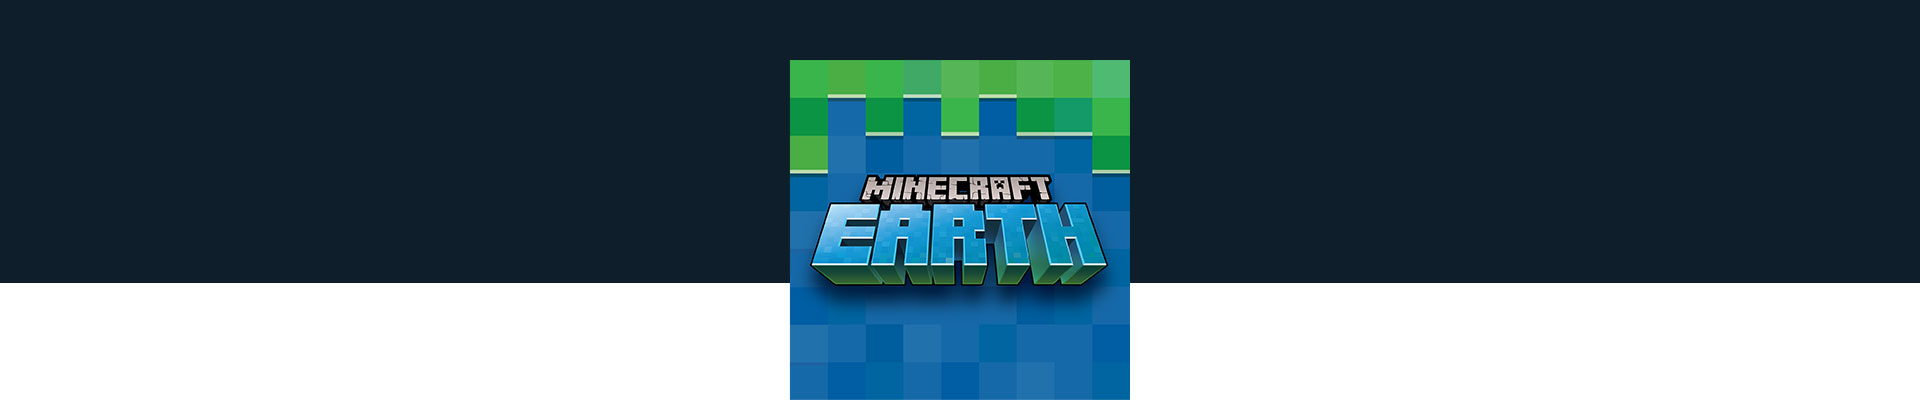 Minecraft Earth | Xbox